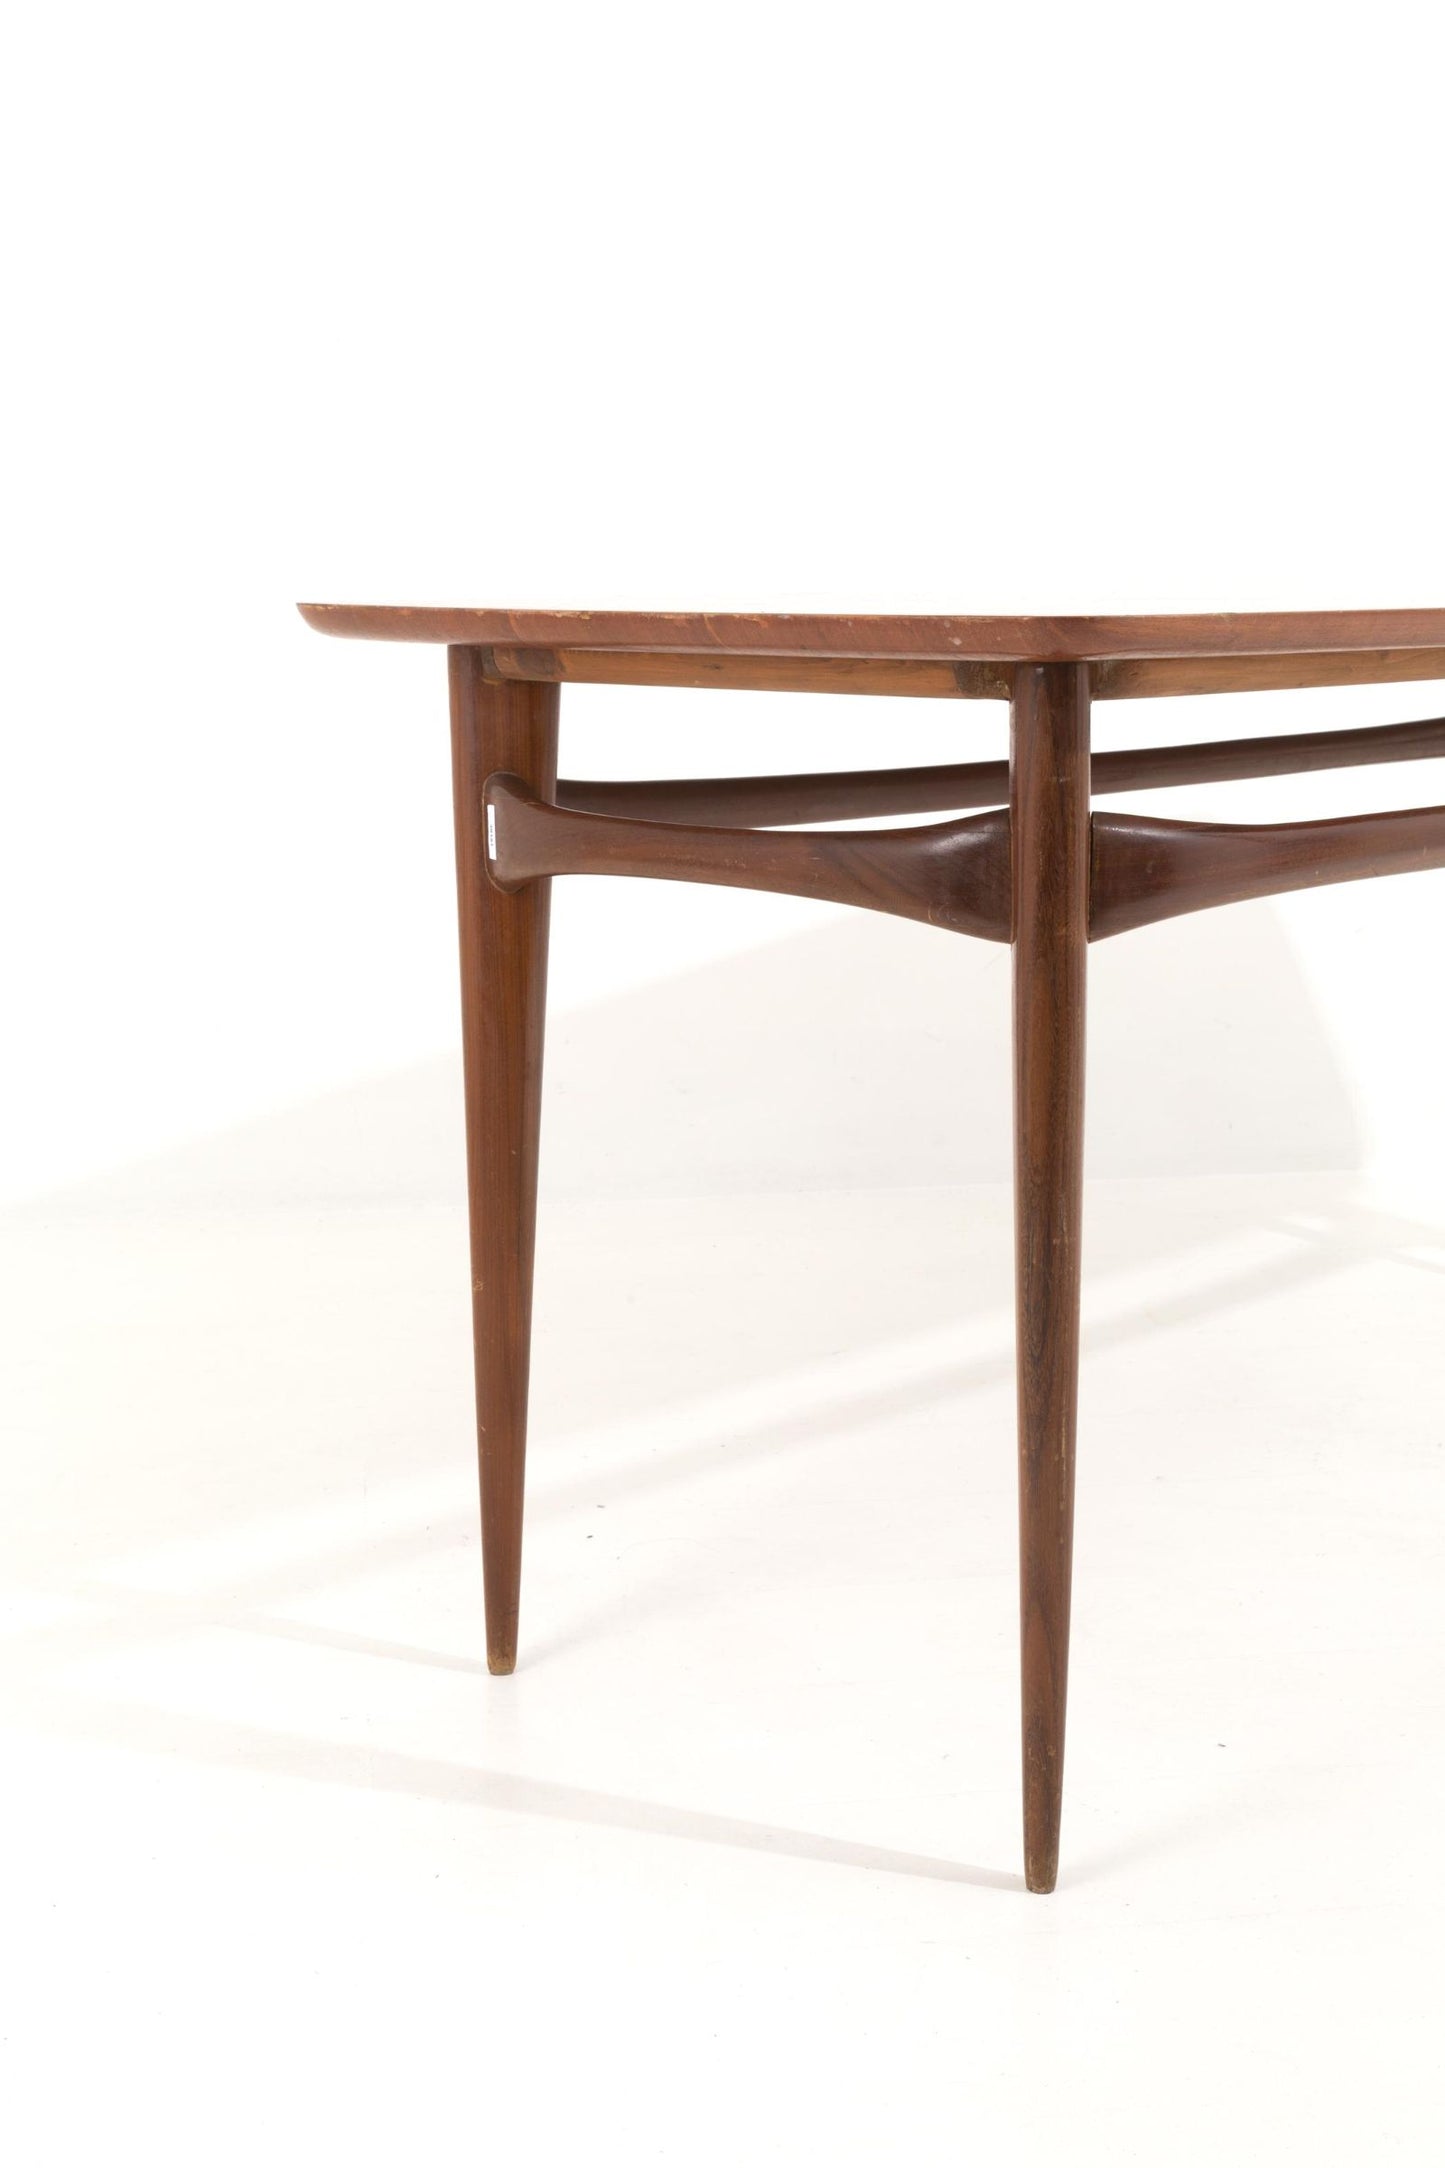 SILVIO CAVATORTA. Walnut table with veneered top, 60s